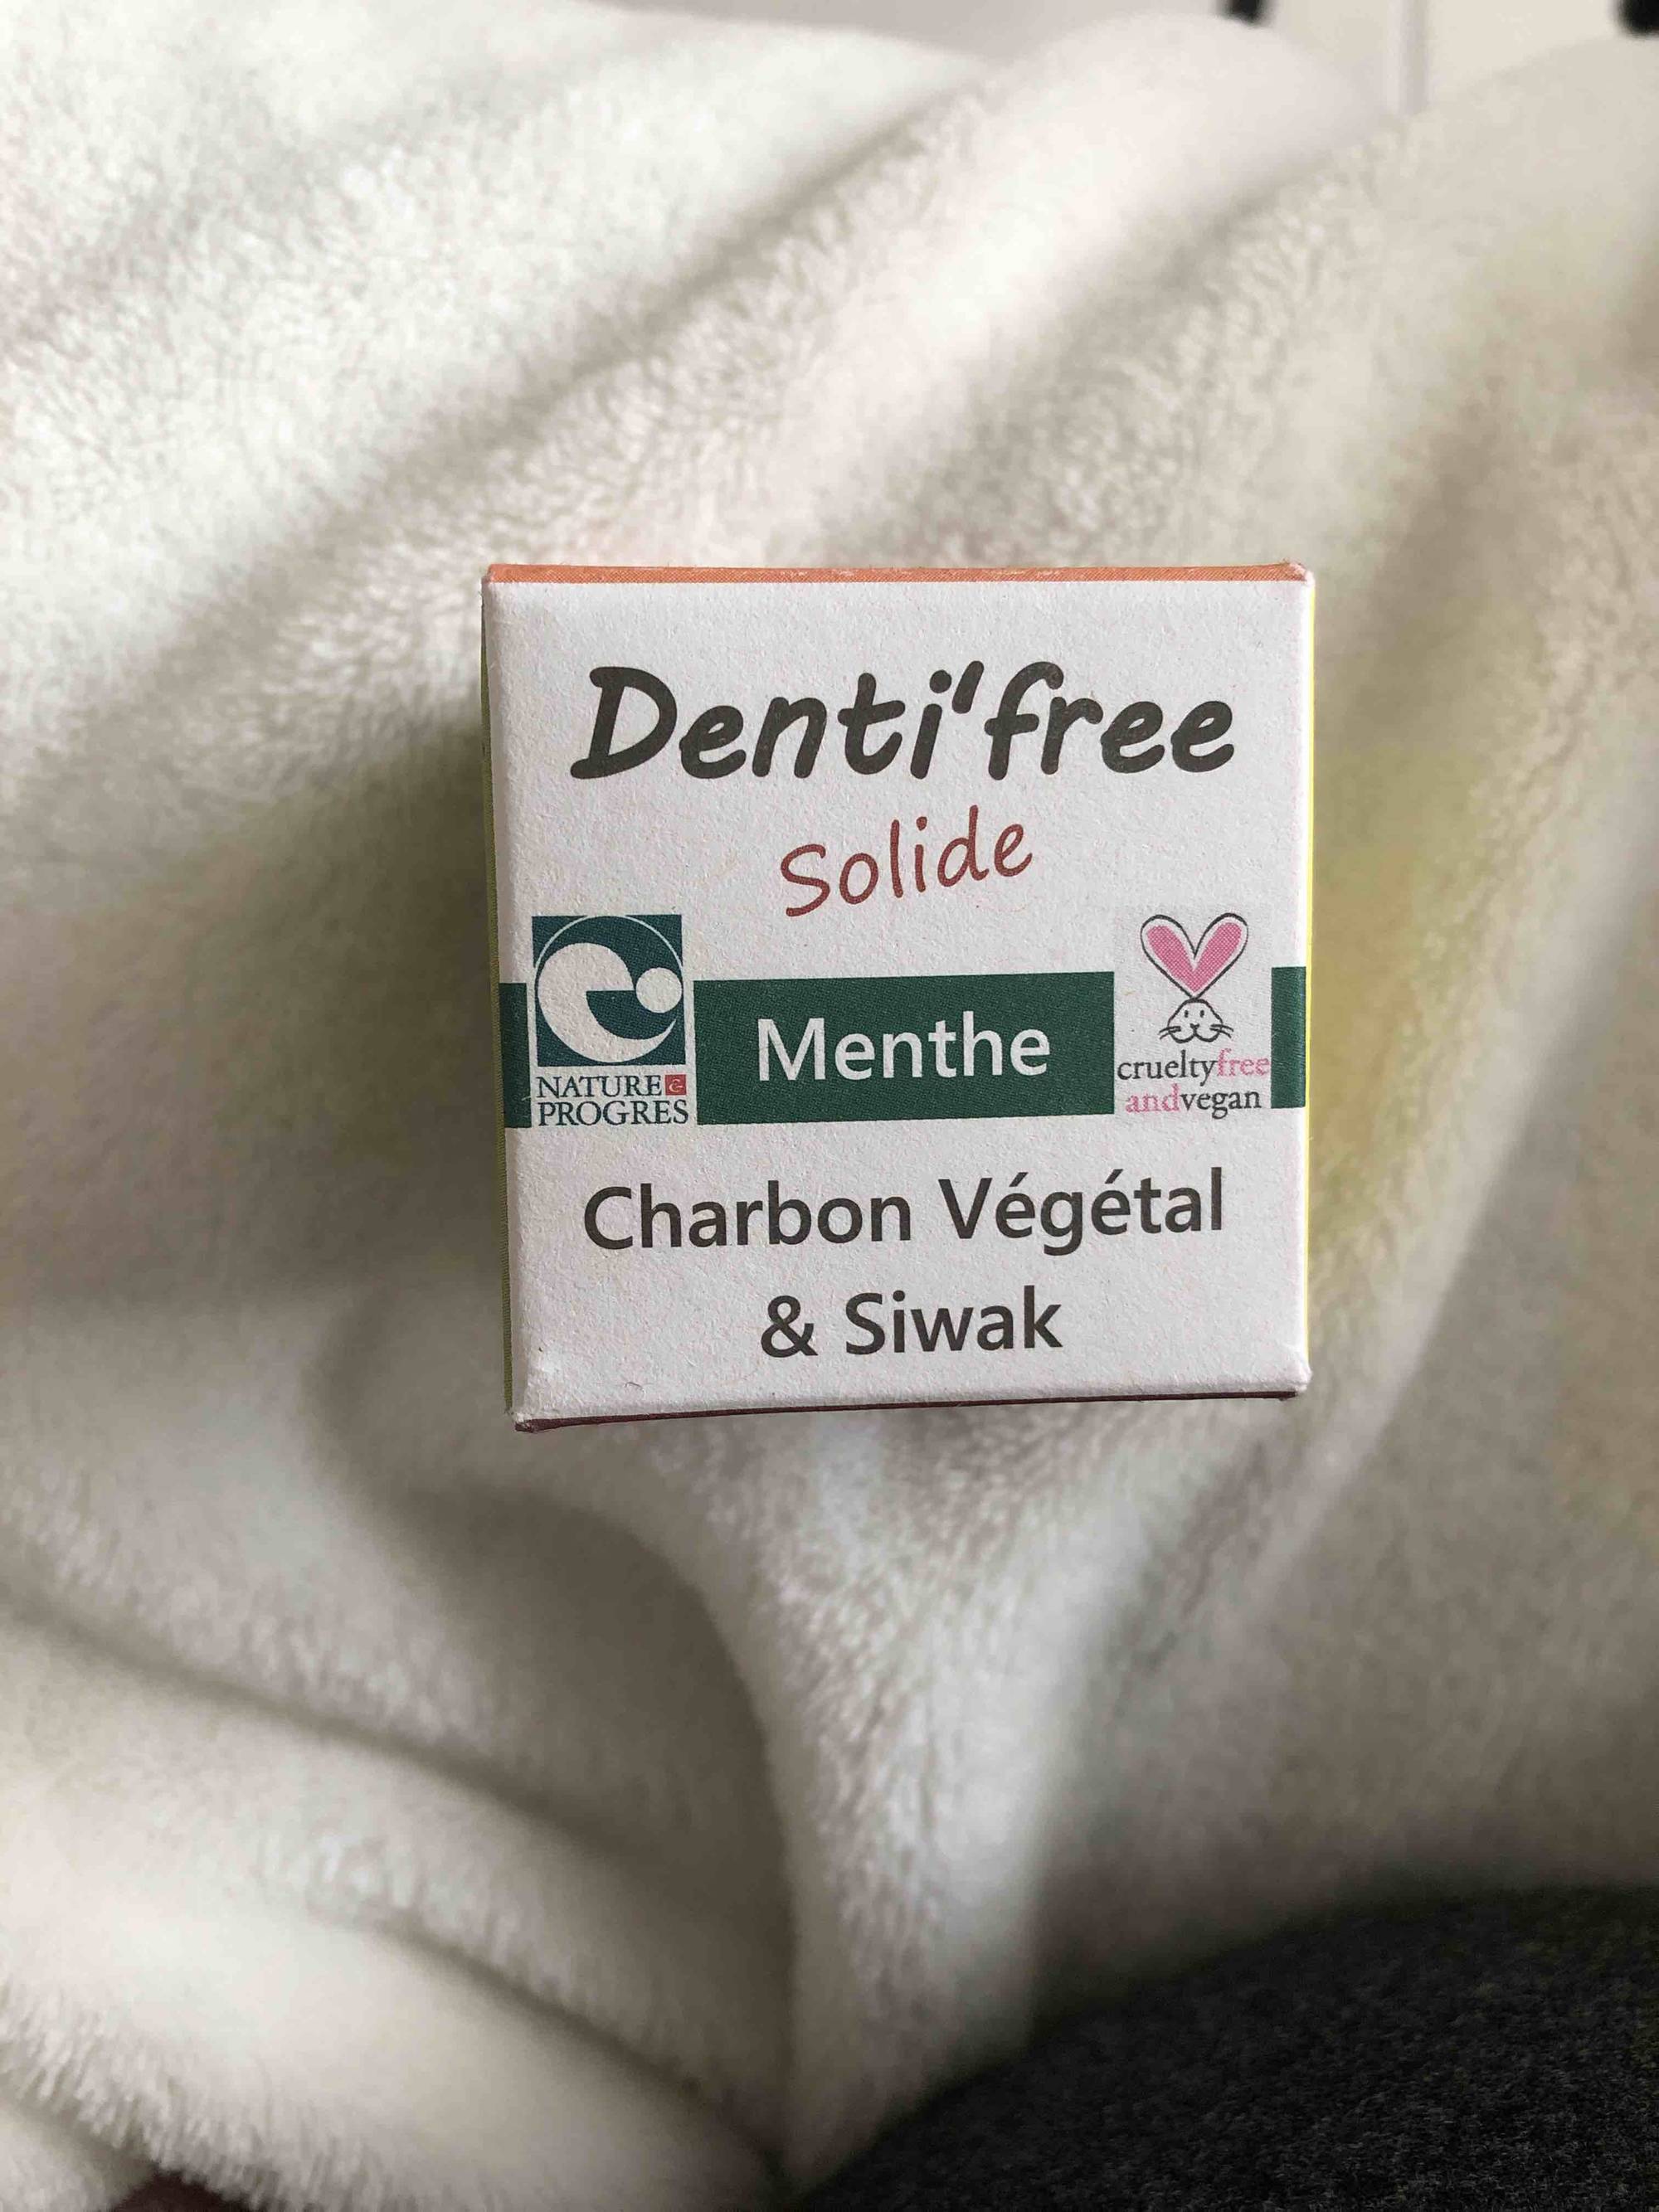 DENTI'FREE - Dentifrice solide menthe - Charbon végétal & siwak